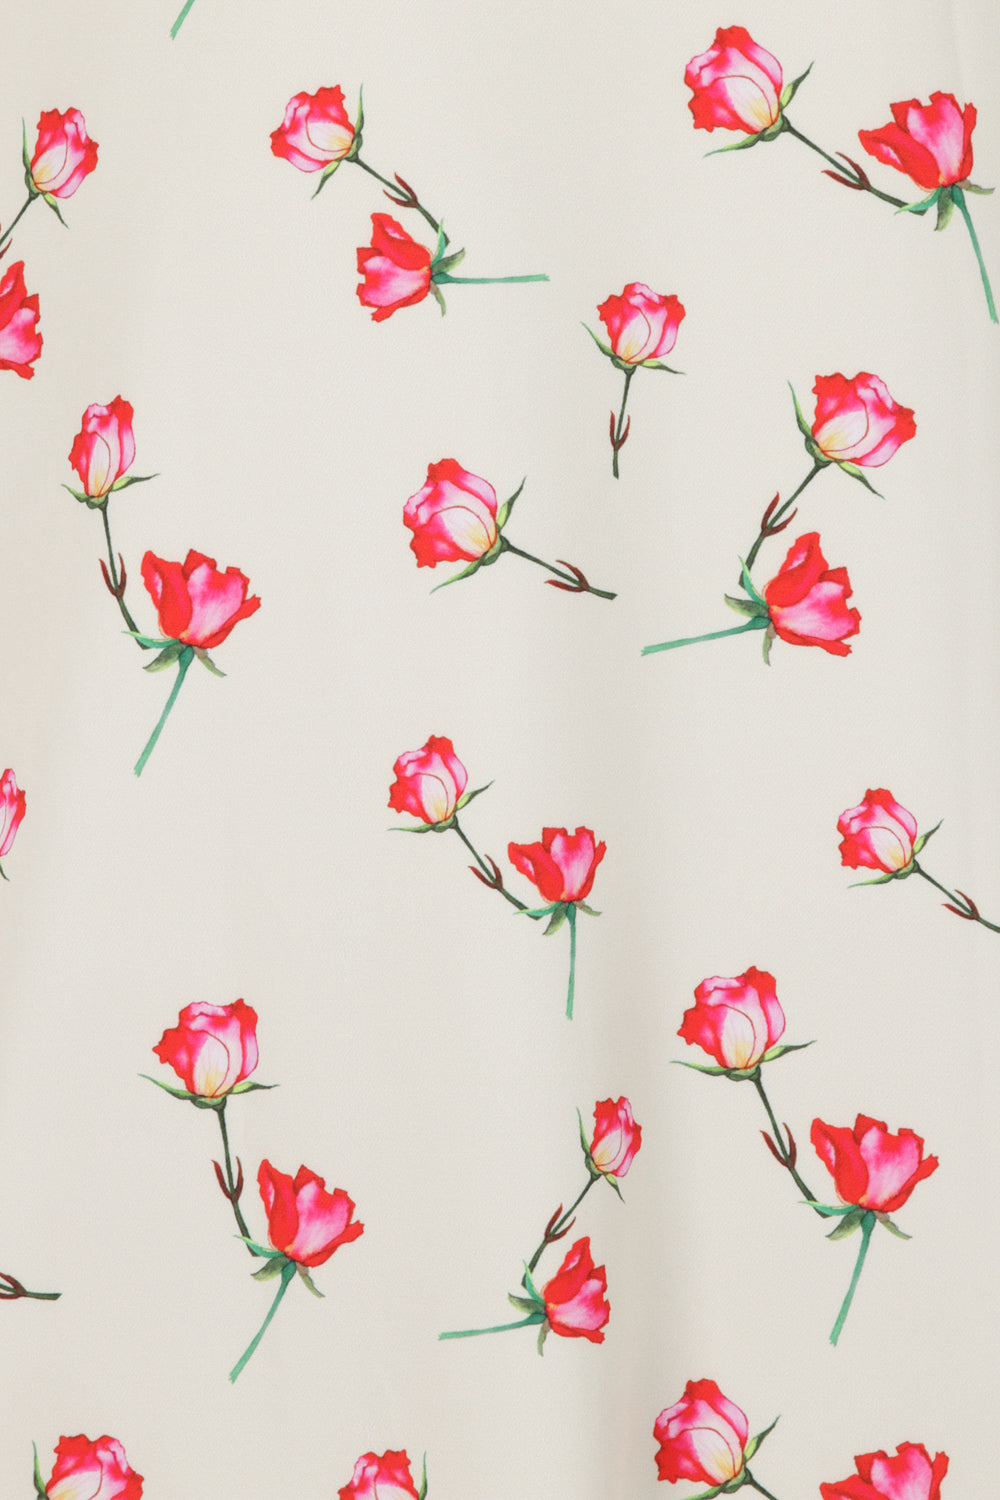 H&R London 50s Sorella Beige Sleeveless Rose Print Dress